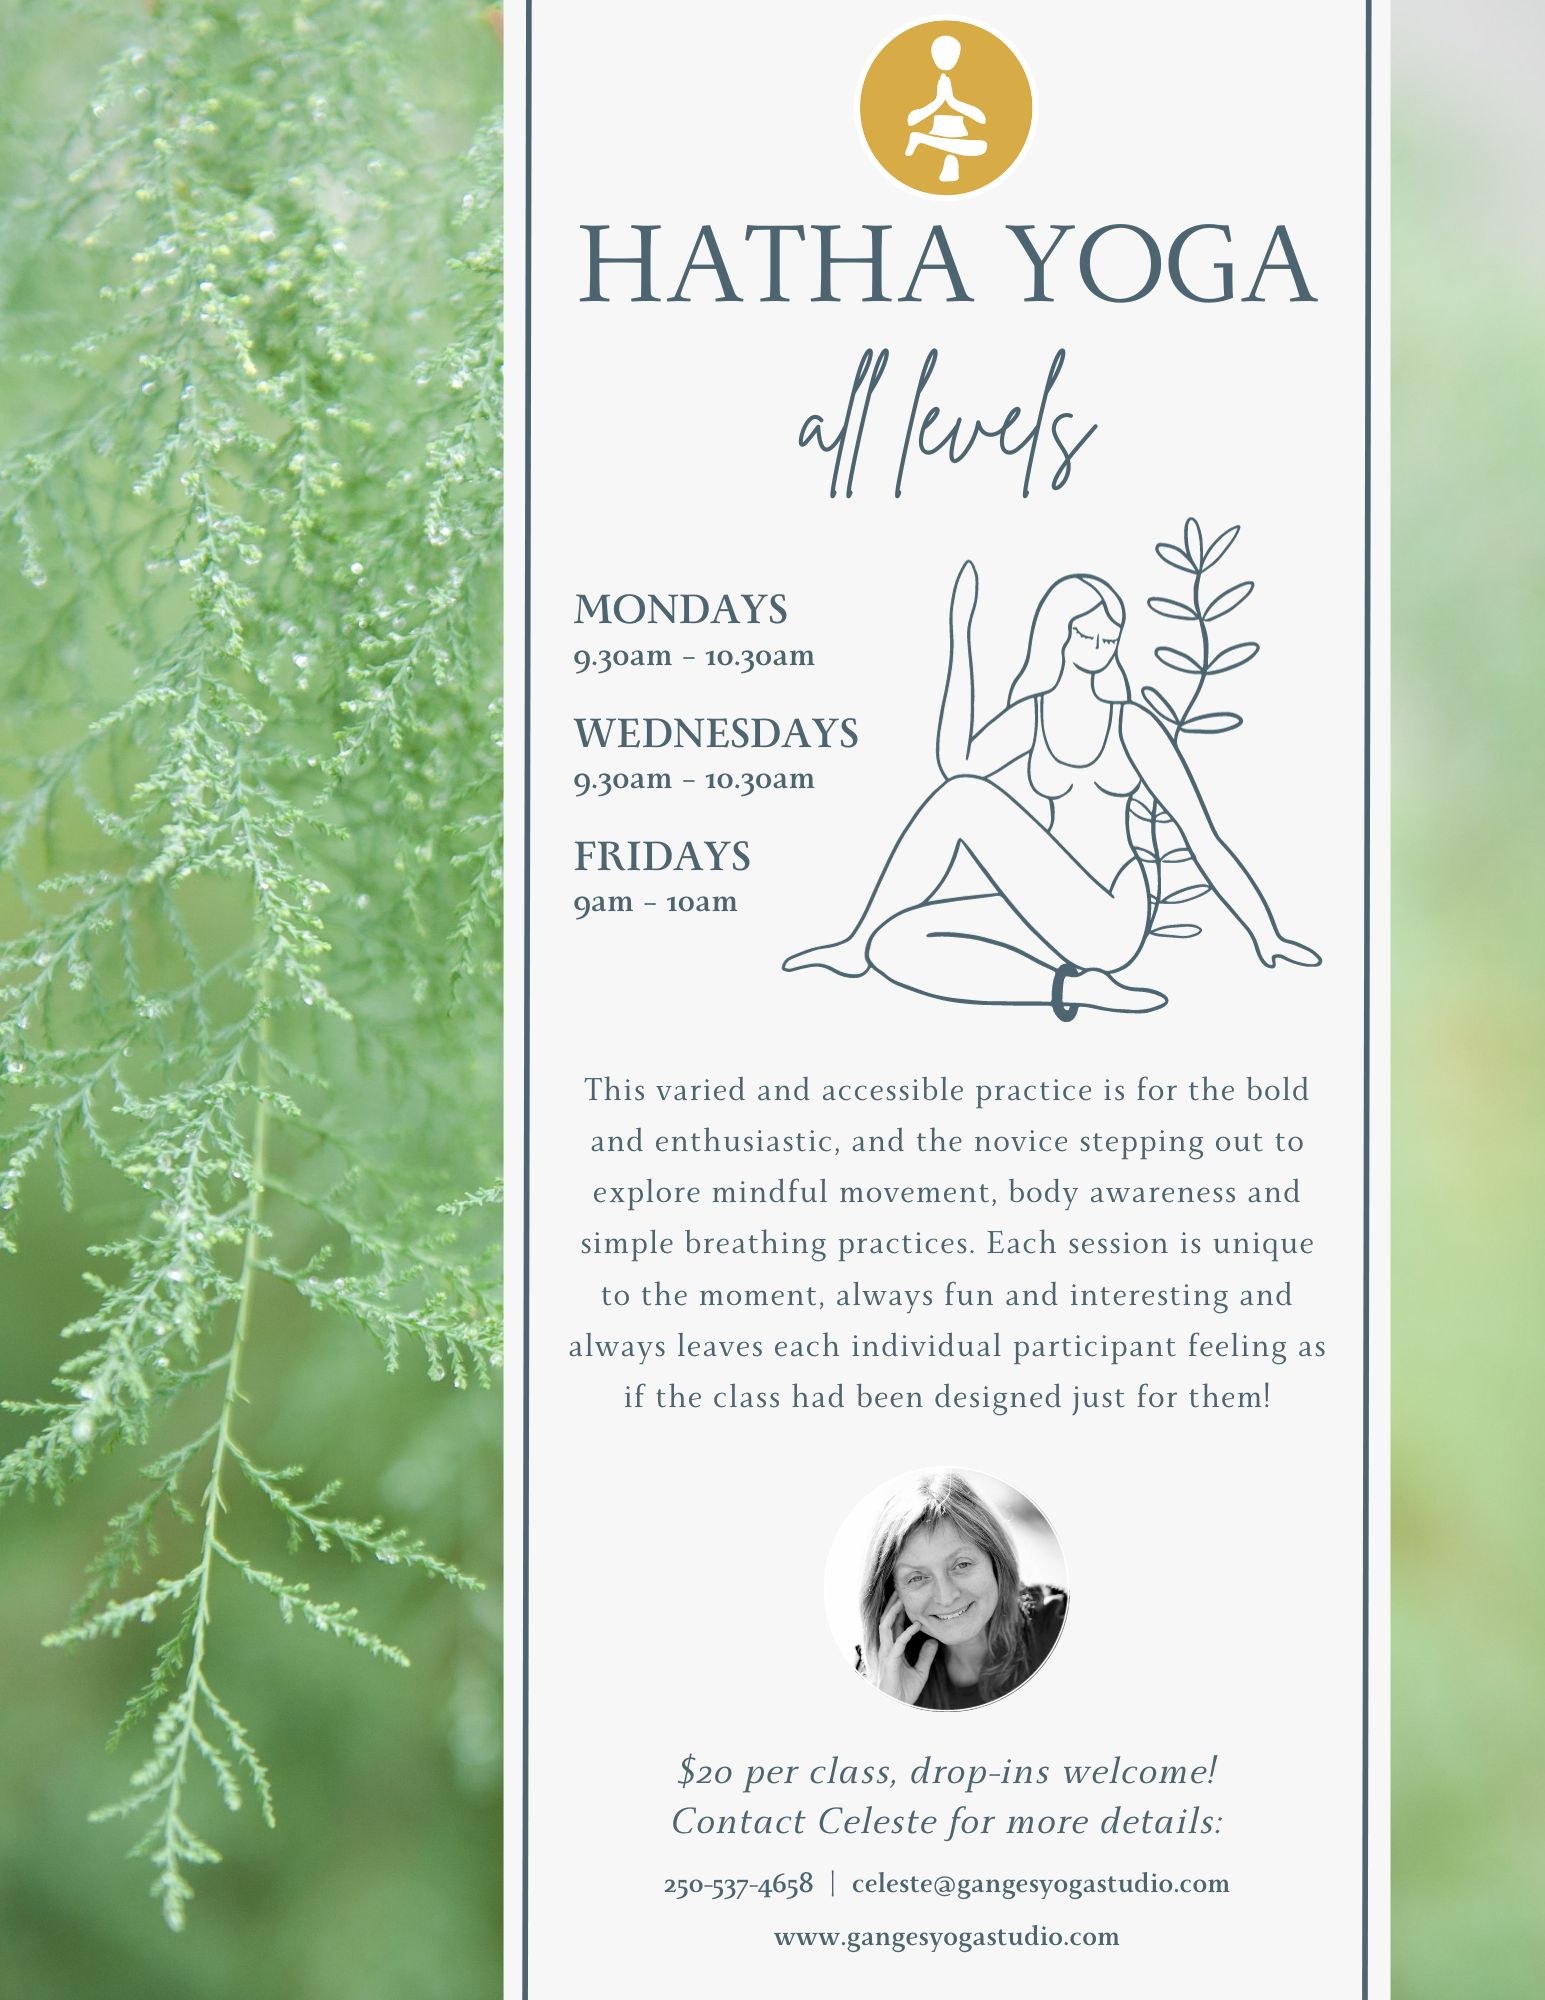 Hatha Yoga All Levels poster